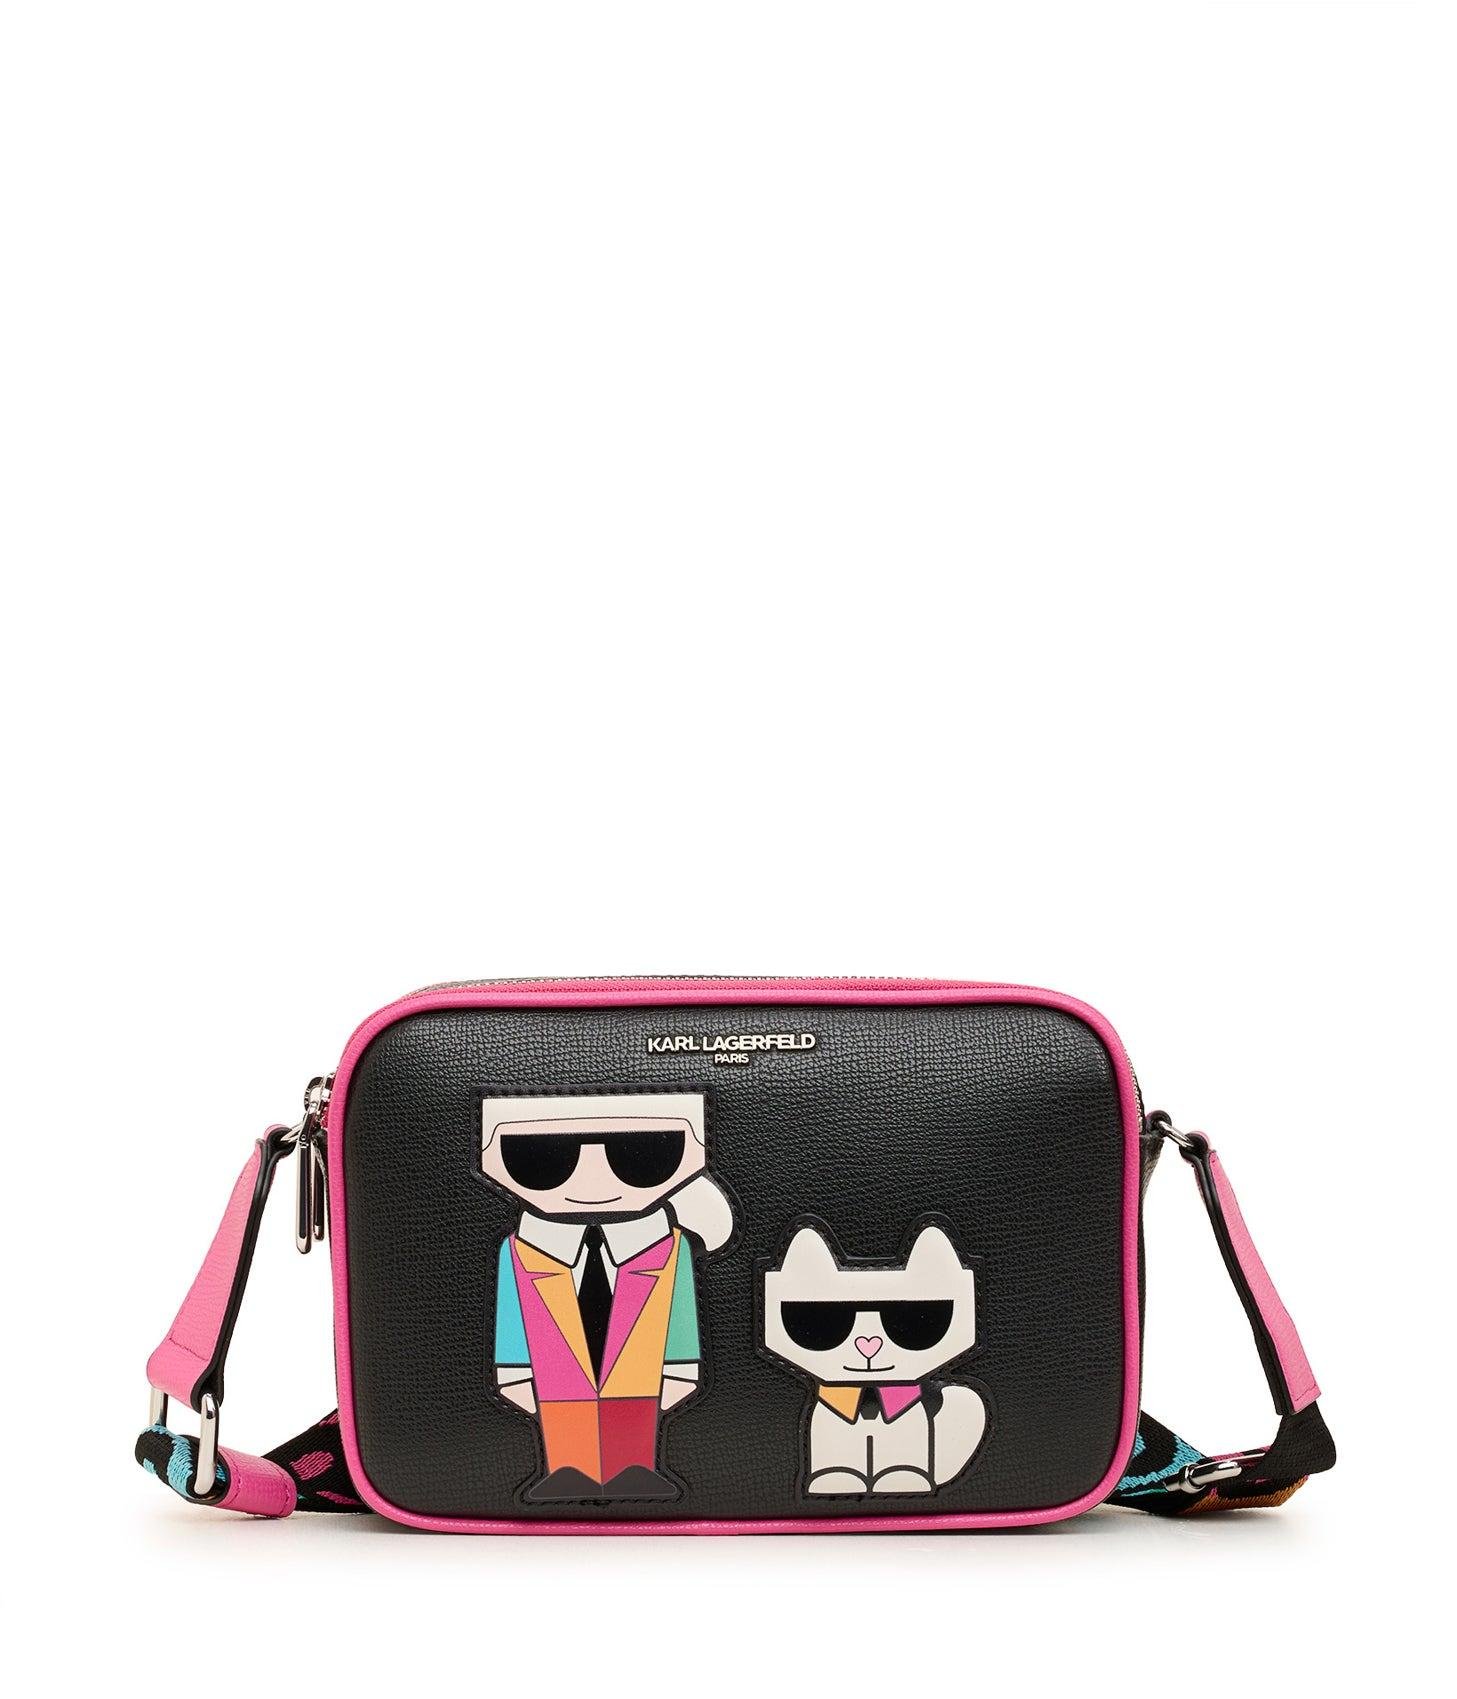 Karl Lagerfeld, Women's Maybelle Camera Crossbody Bag, Black/pink, Size